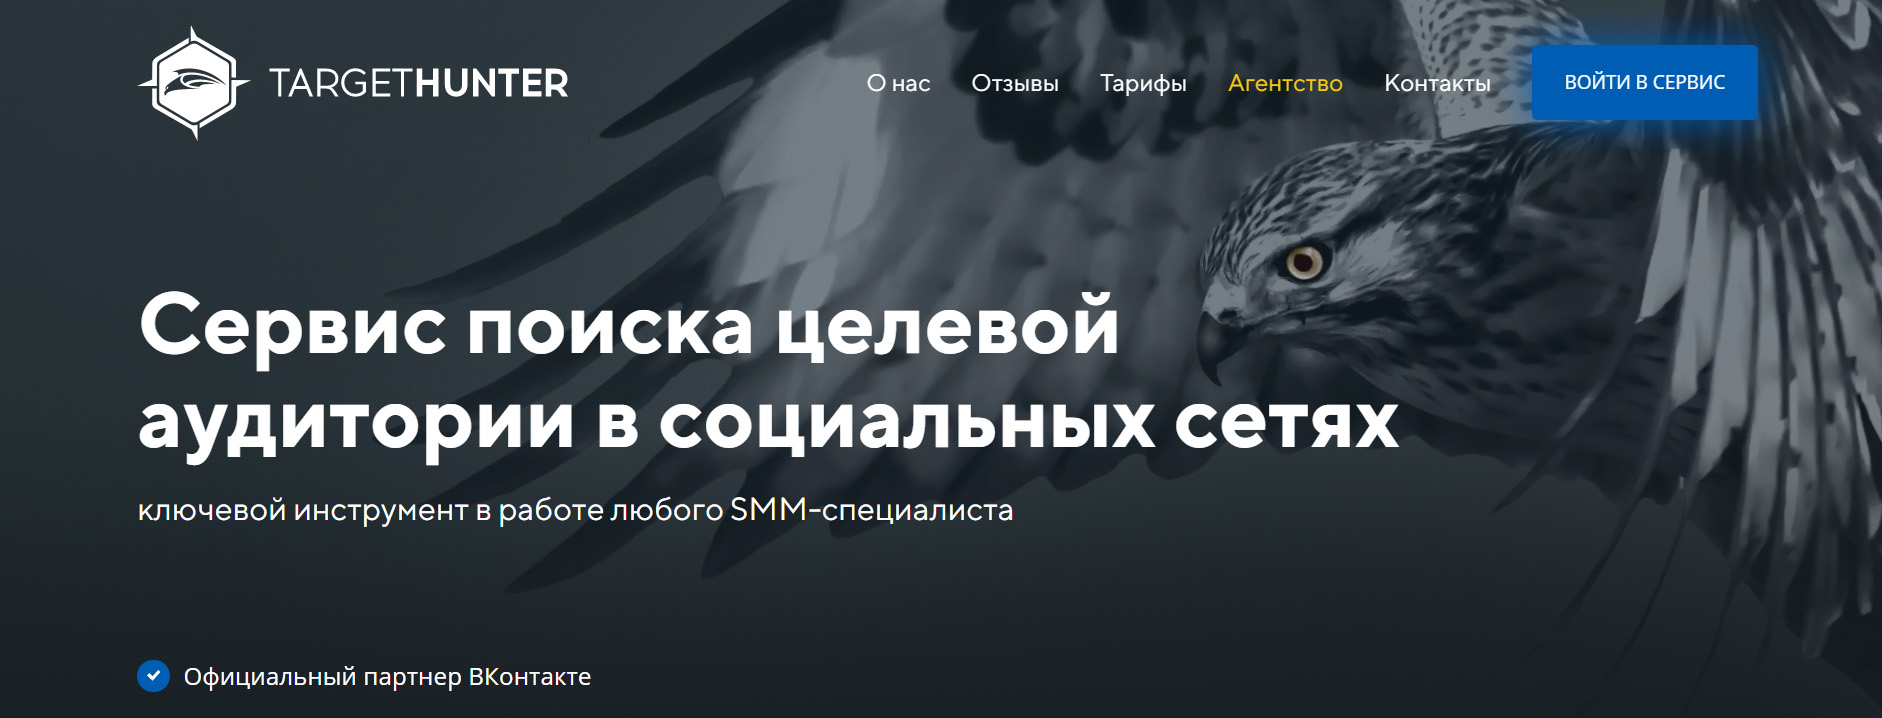 18 сервисов диджитал-маркетолога: TargetHunter - сервис для парсинга целевой аудитории во ВКонтакте